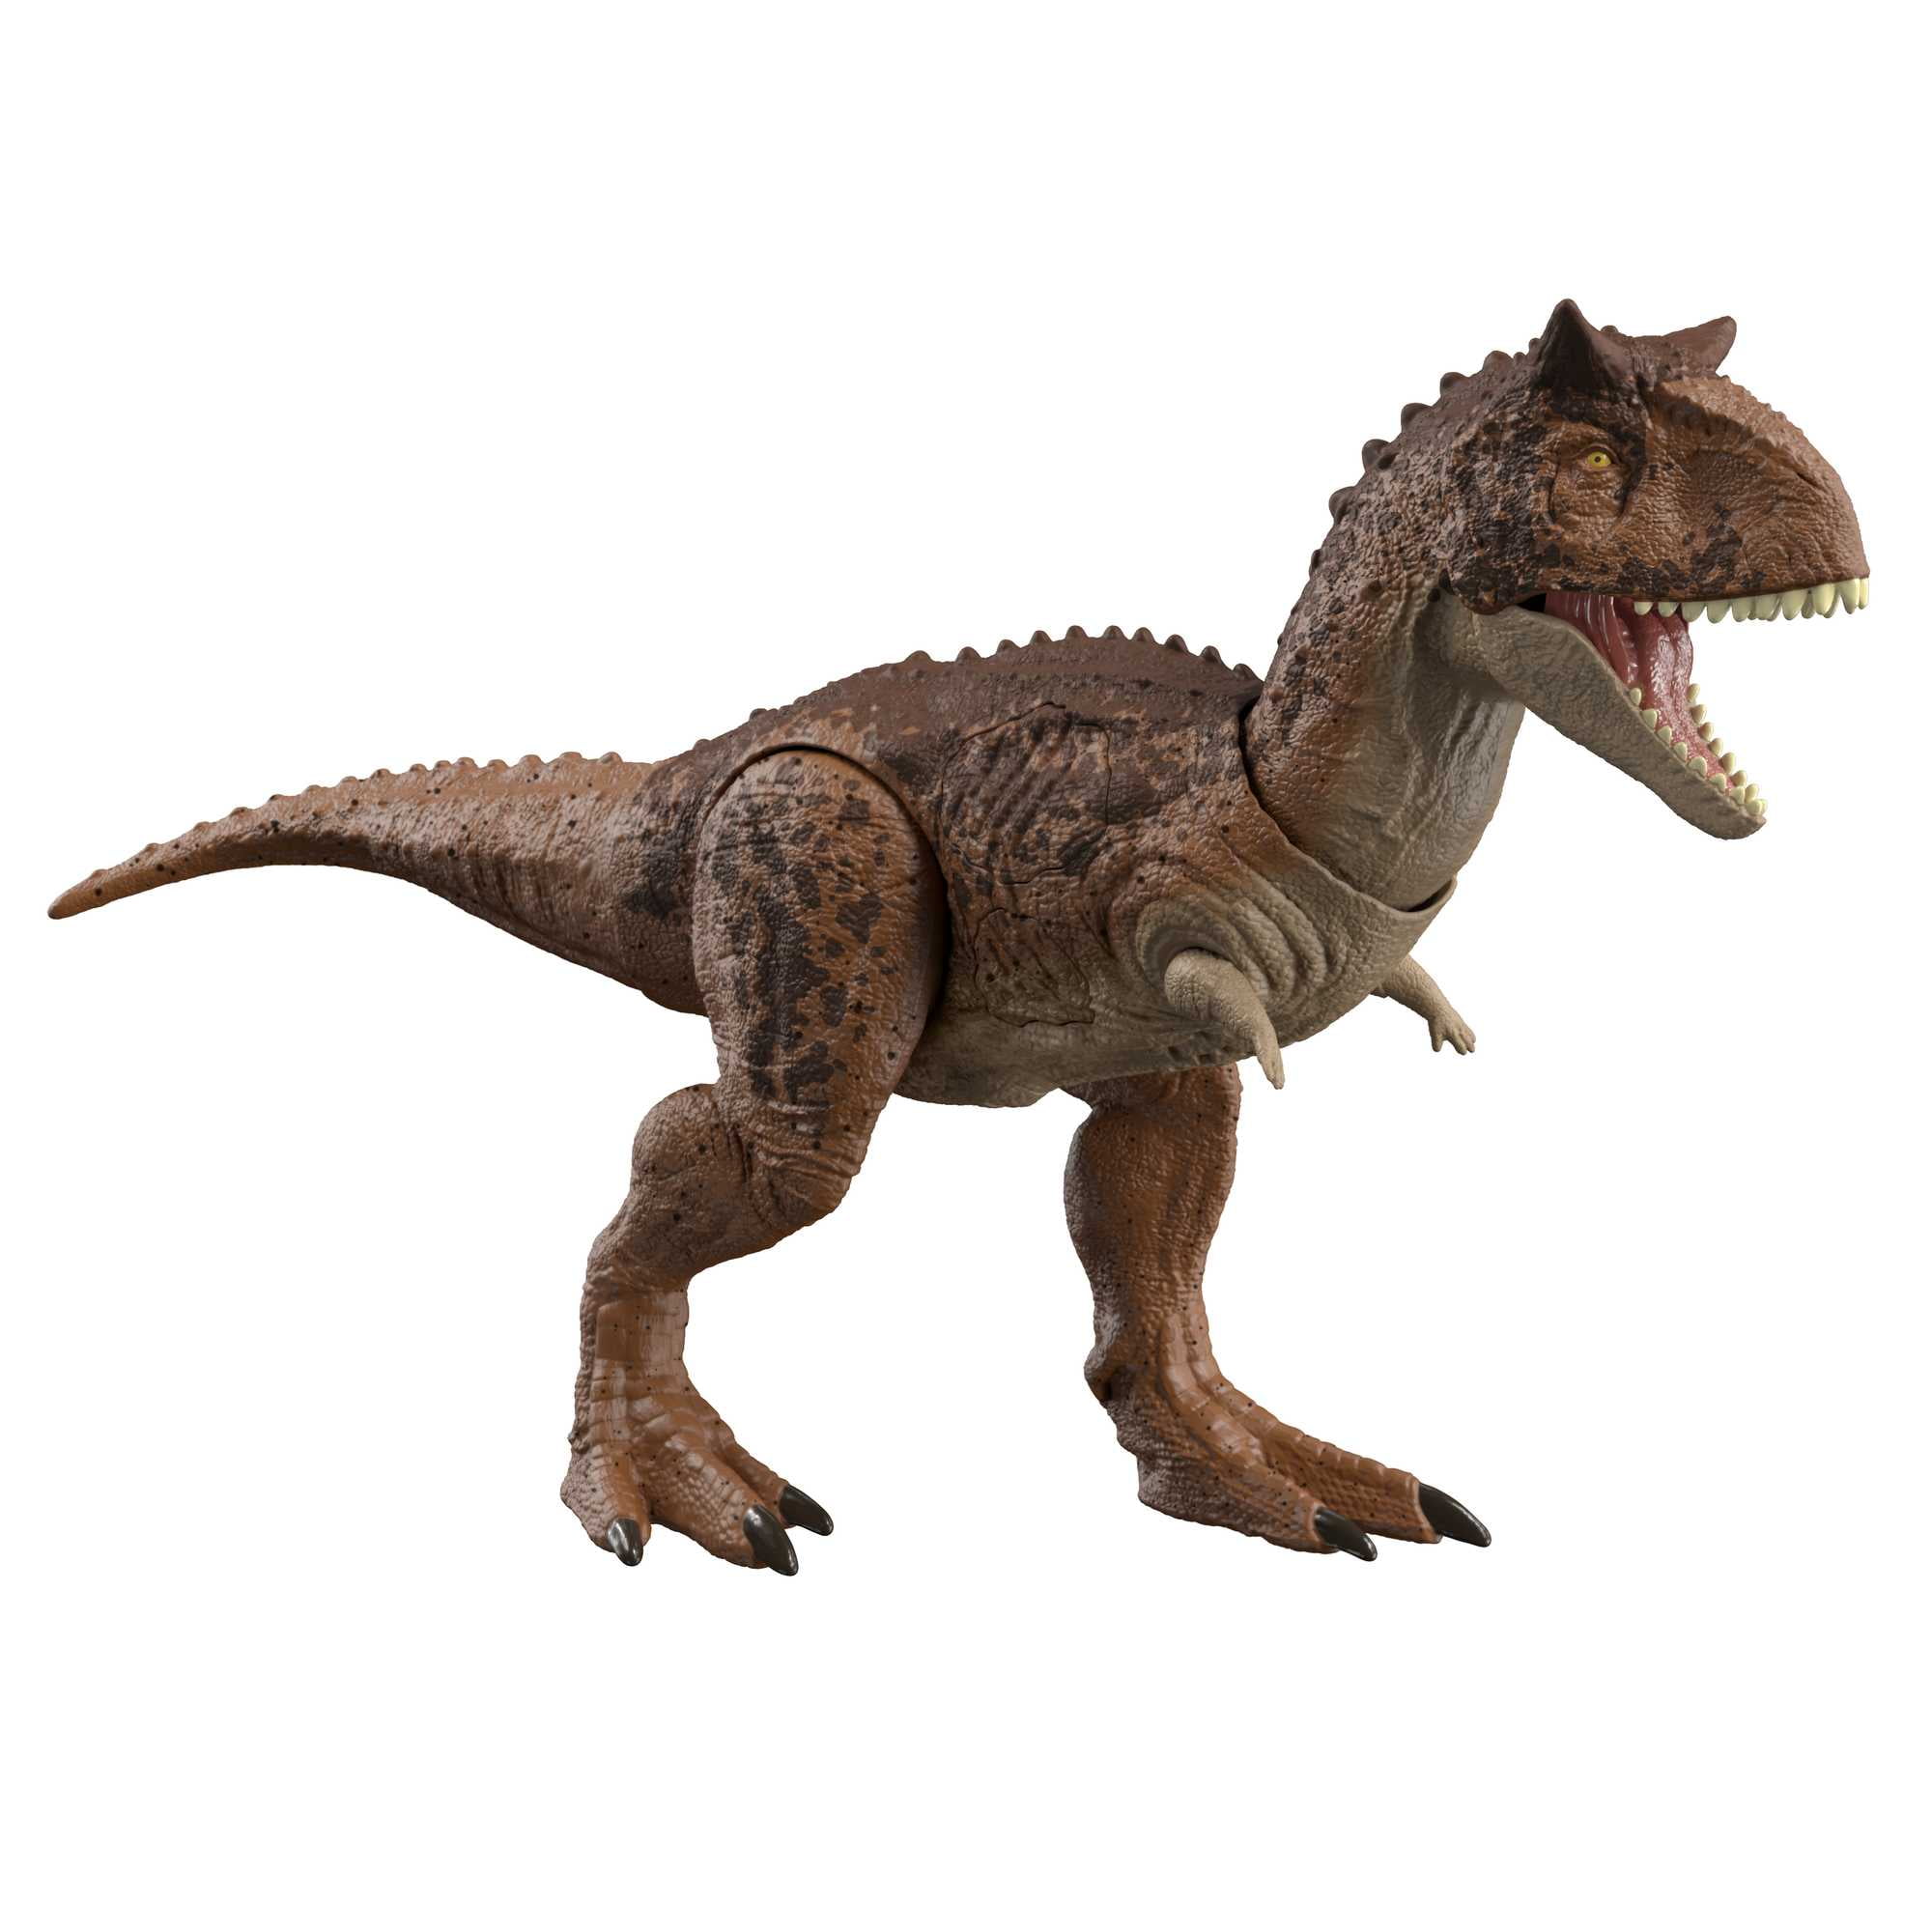 Jurassic World: Fallen Kingdom Dinosaur Toy Epic Attack